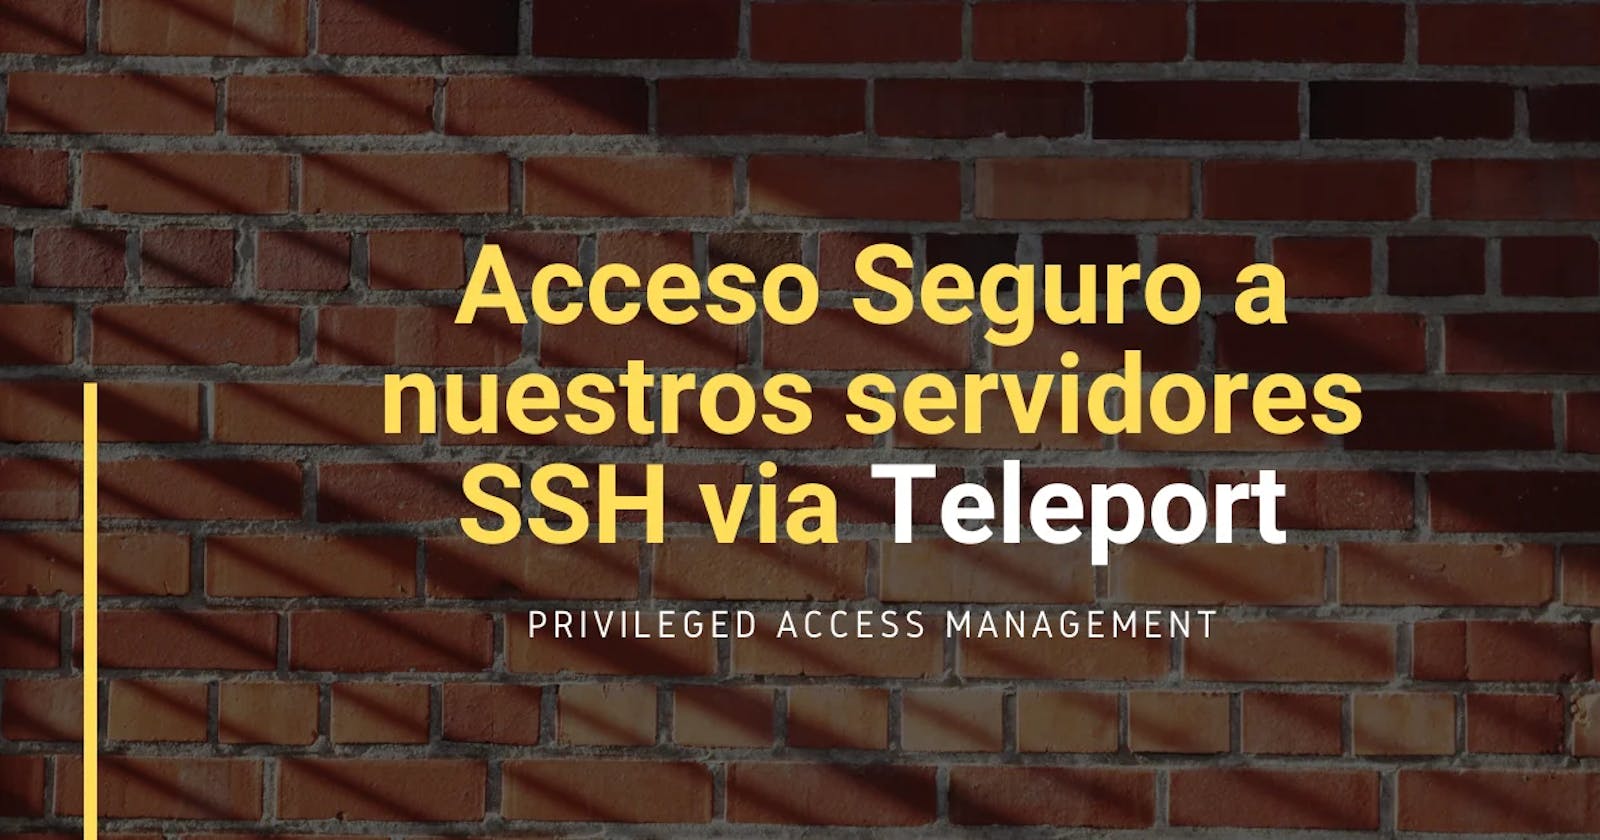 Acceso Seguro a nuestro servidores SSH via Teleport